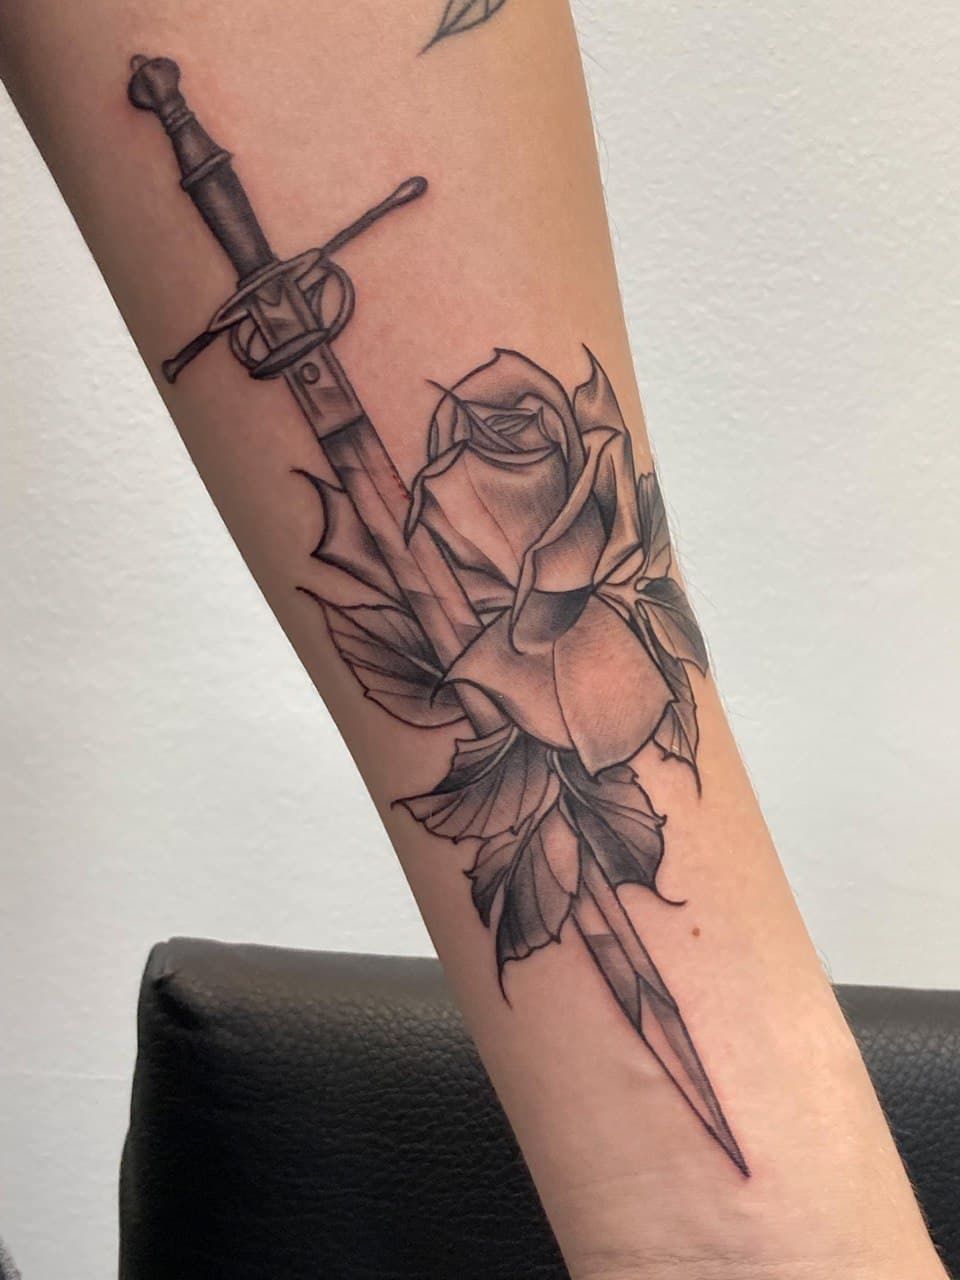 TattooGrid on Twitter Rose And Sword Thigh Tattoo Ink Roses Tattoos  httpstcoTbhlK9ndDi httpstcoXGC2cQiqsO  Twitter